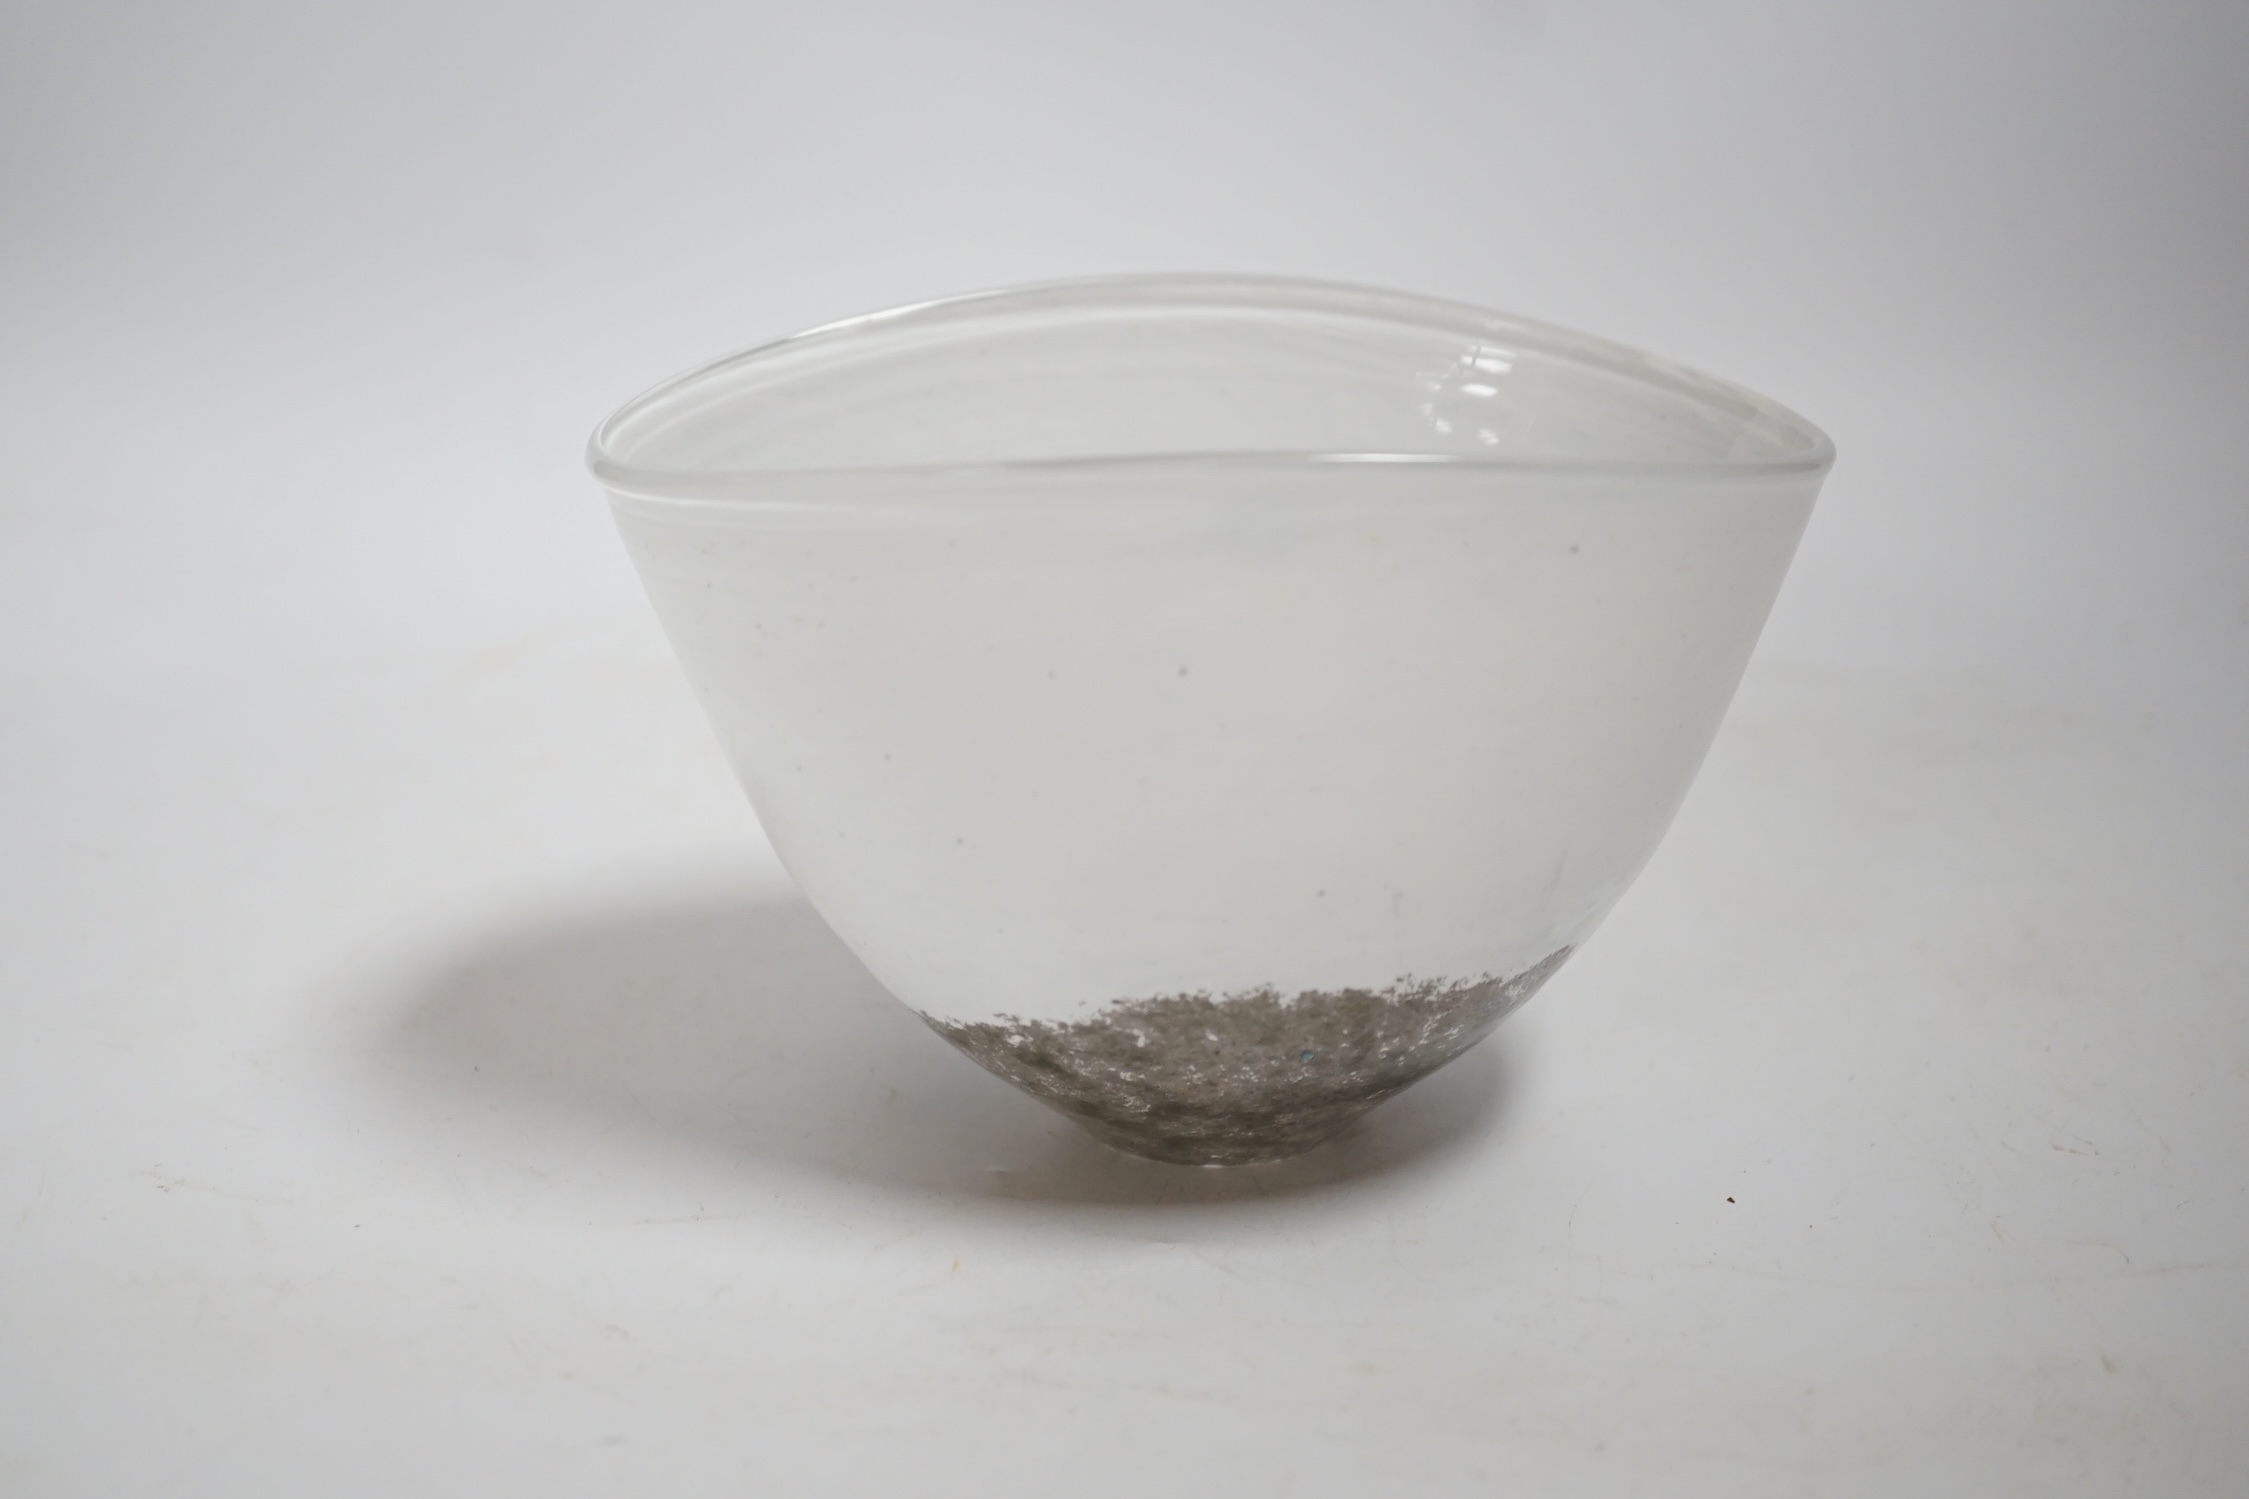 A Kosta Boda Ilugmou glass vase, 9cm